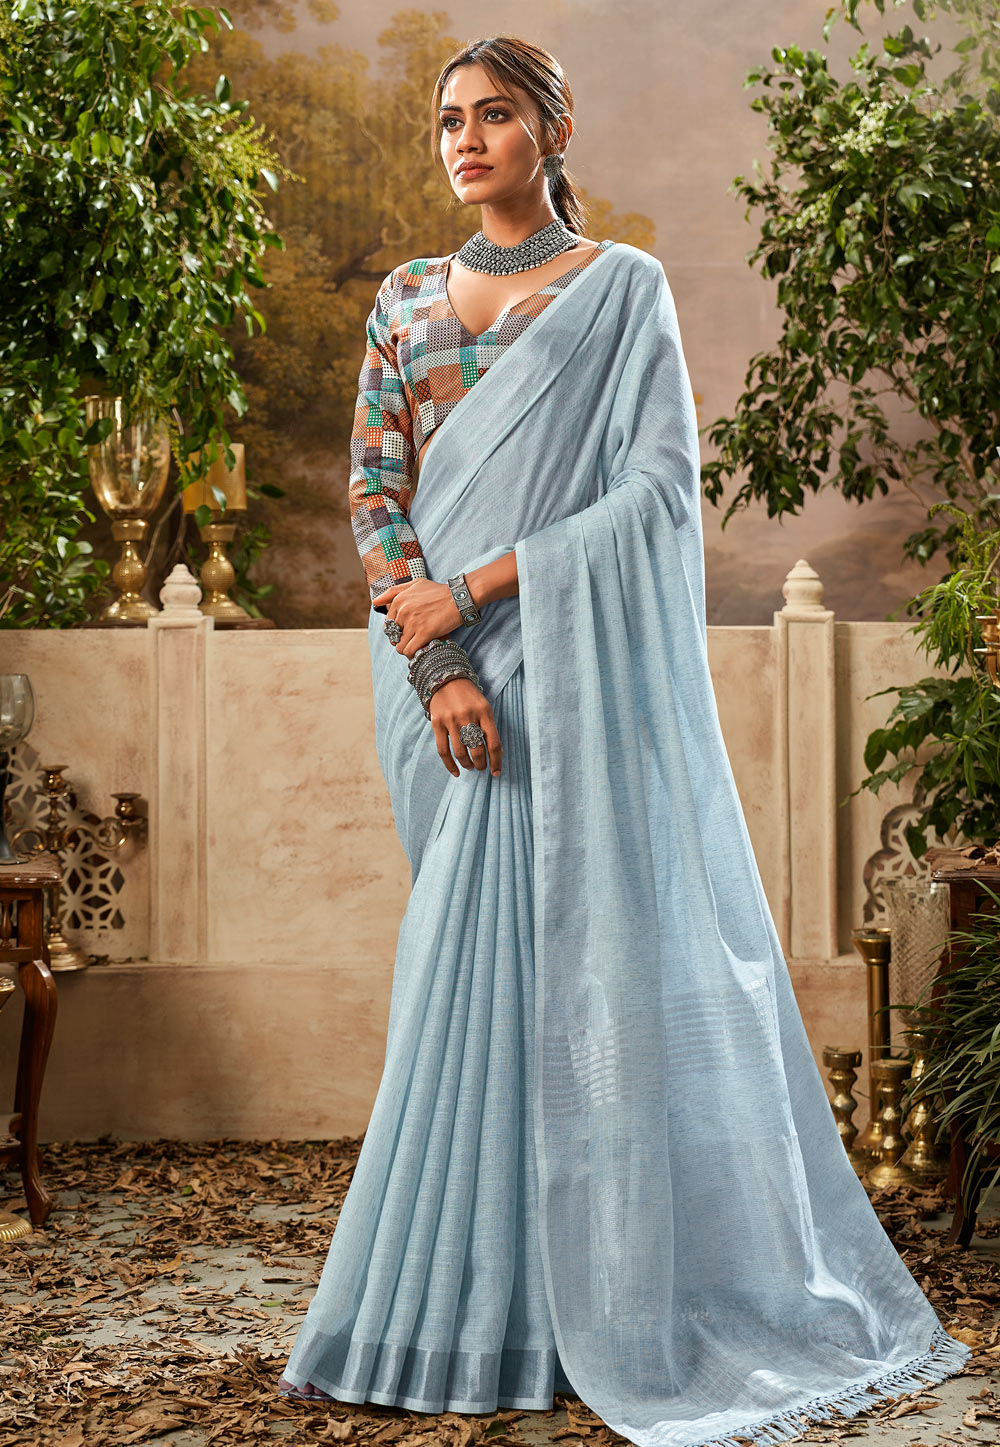 Sky Blue Saree Sari Lichi Silk Indian Pakistani Bollywood Wedding Party  Wear Top | eBay